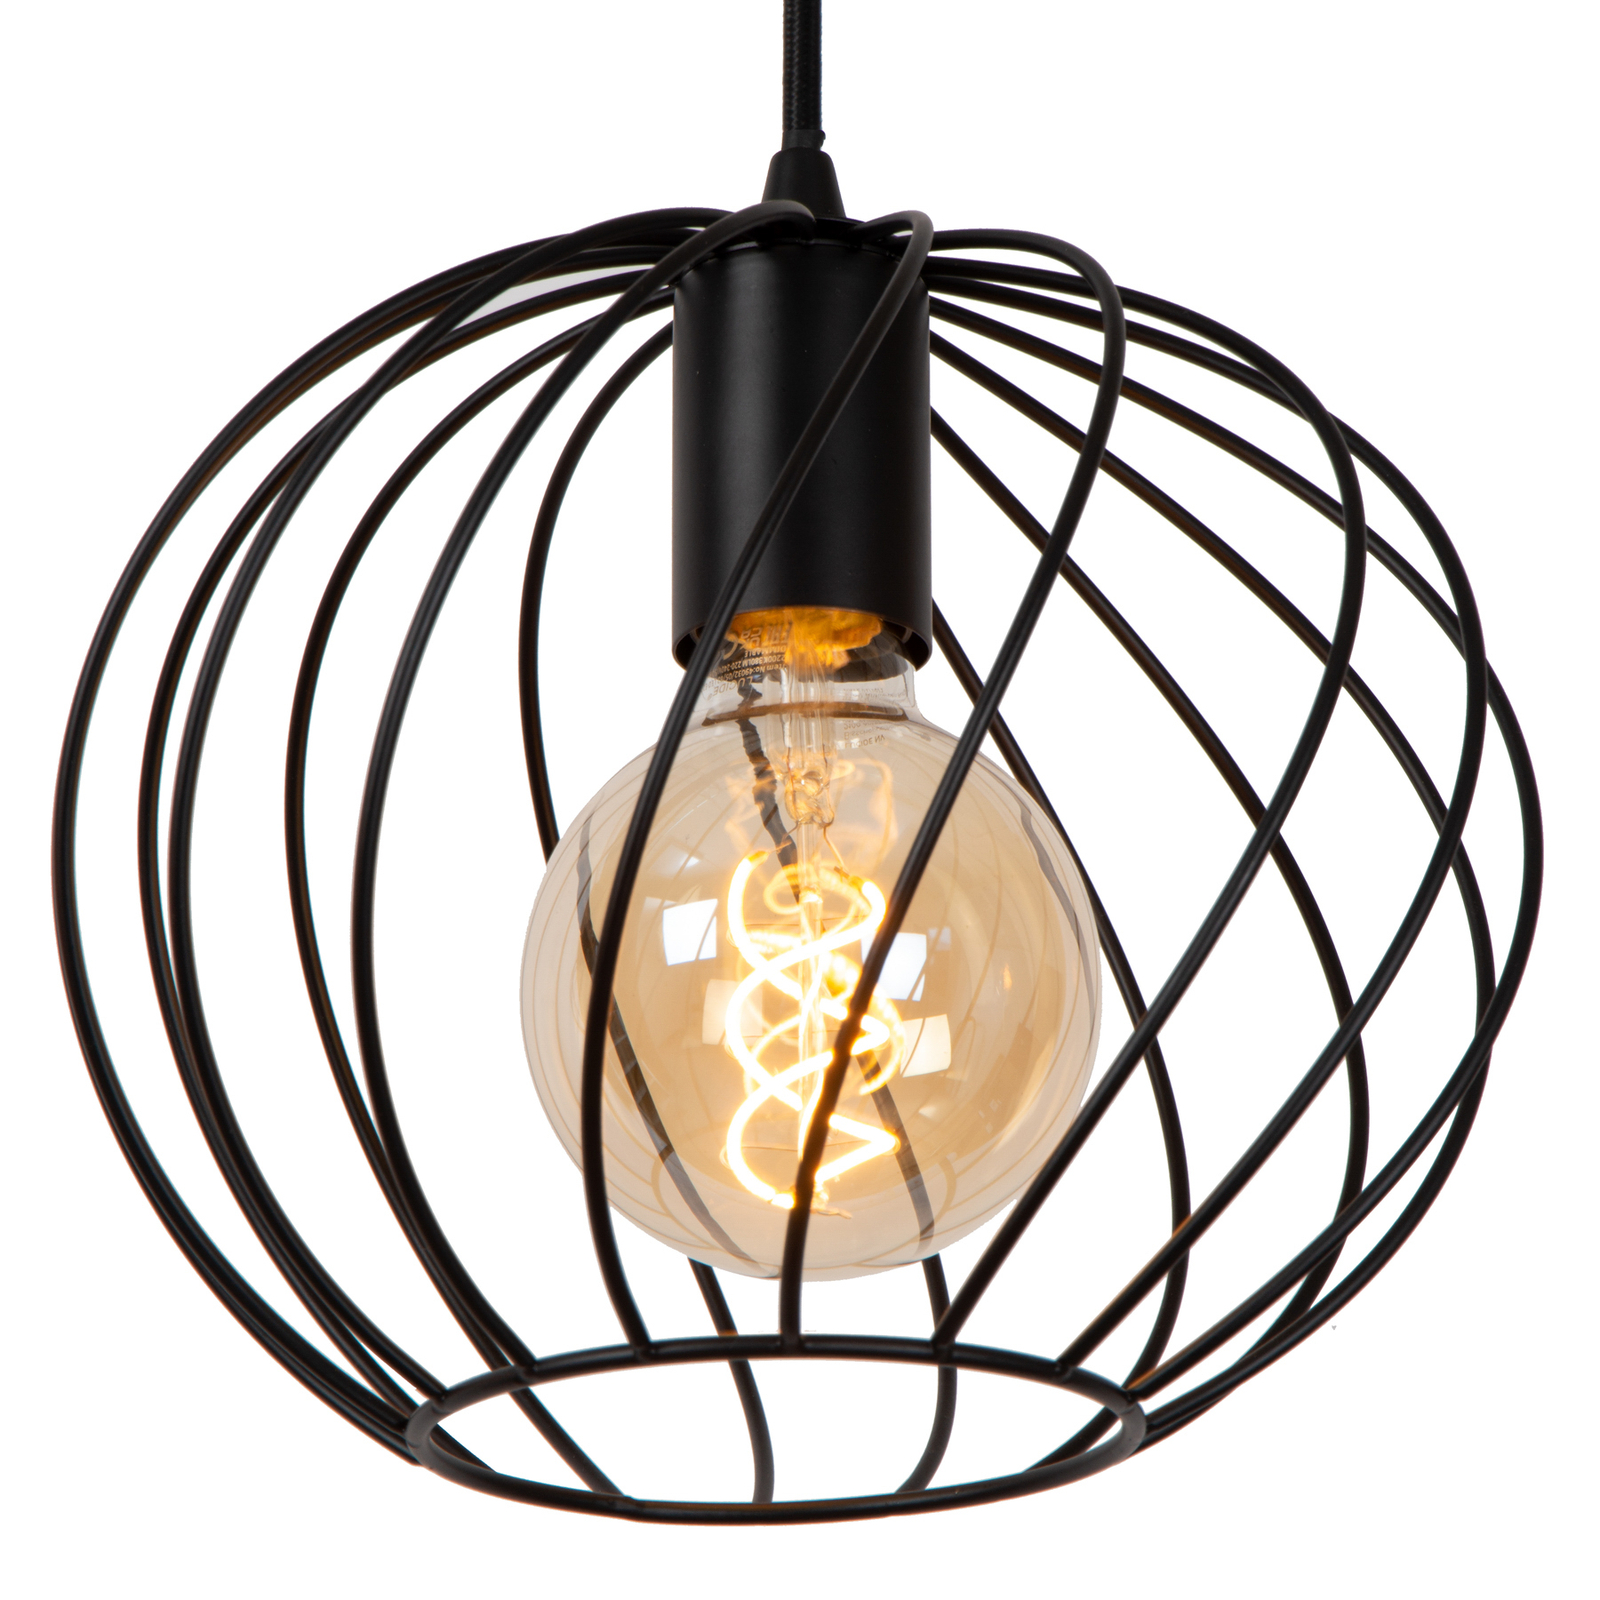 Hanglamp Danza, 3-lamps, langwerpig, zwart